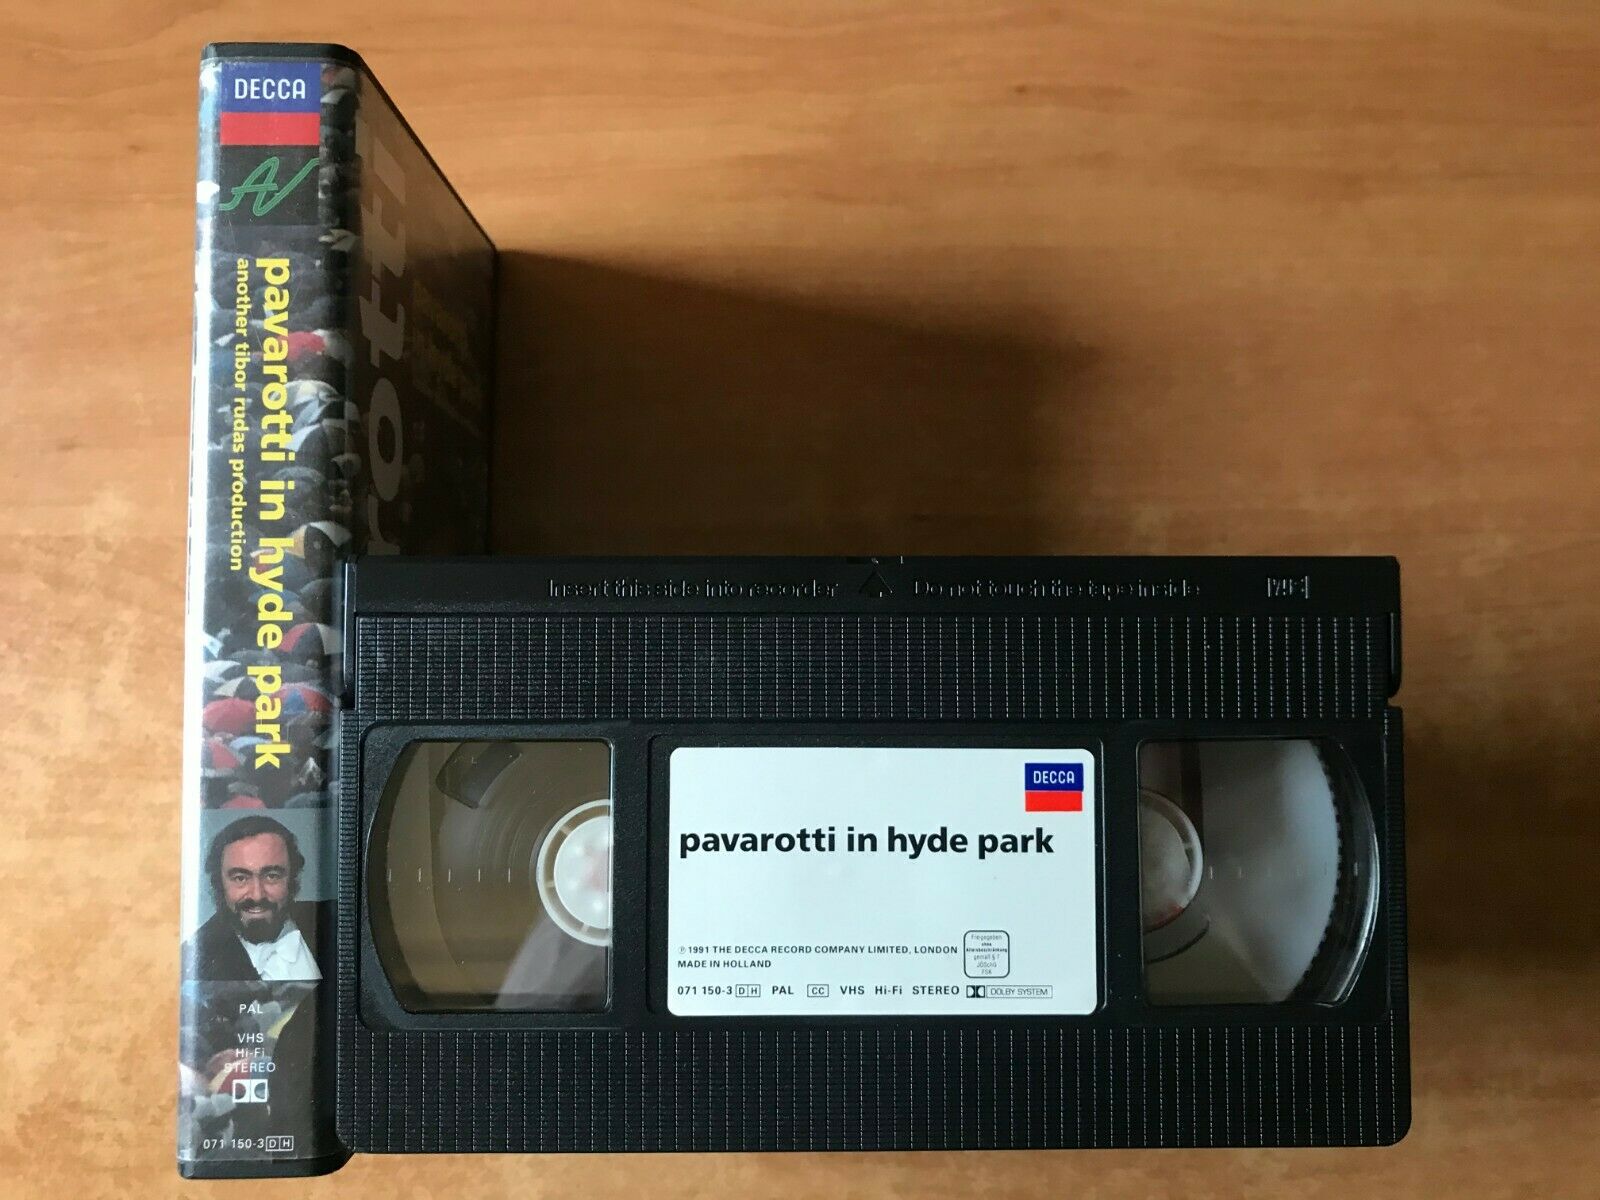 Luciano Pavarotti In Hyde Park (Decca) - Live Performance - Tenor - Music - VHS-